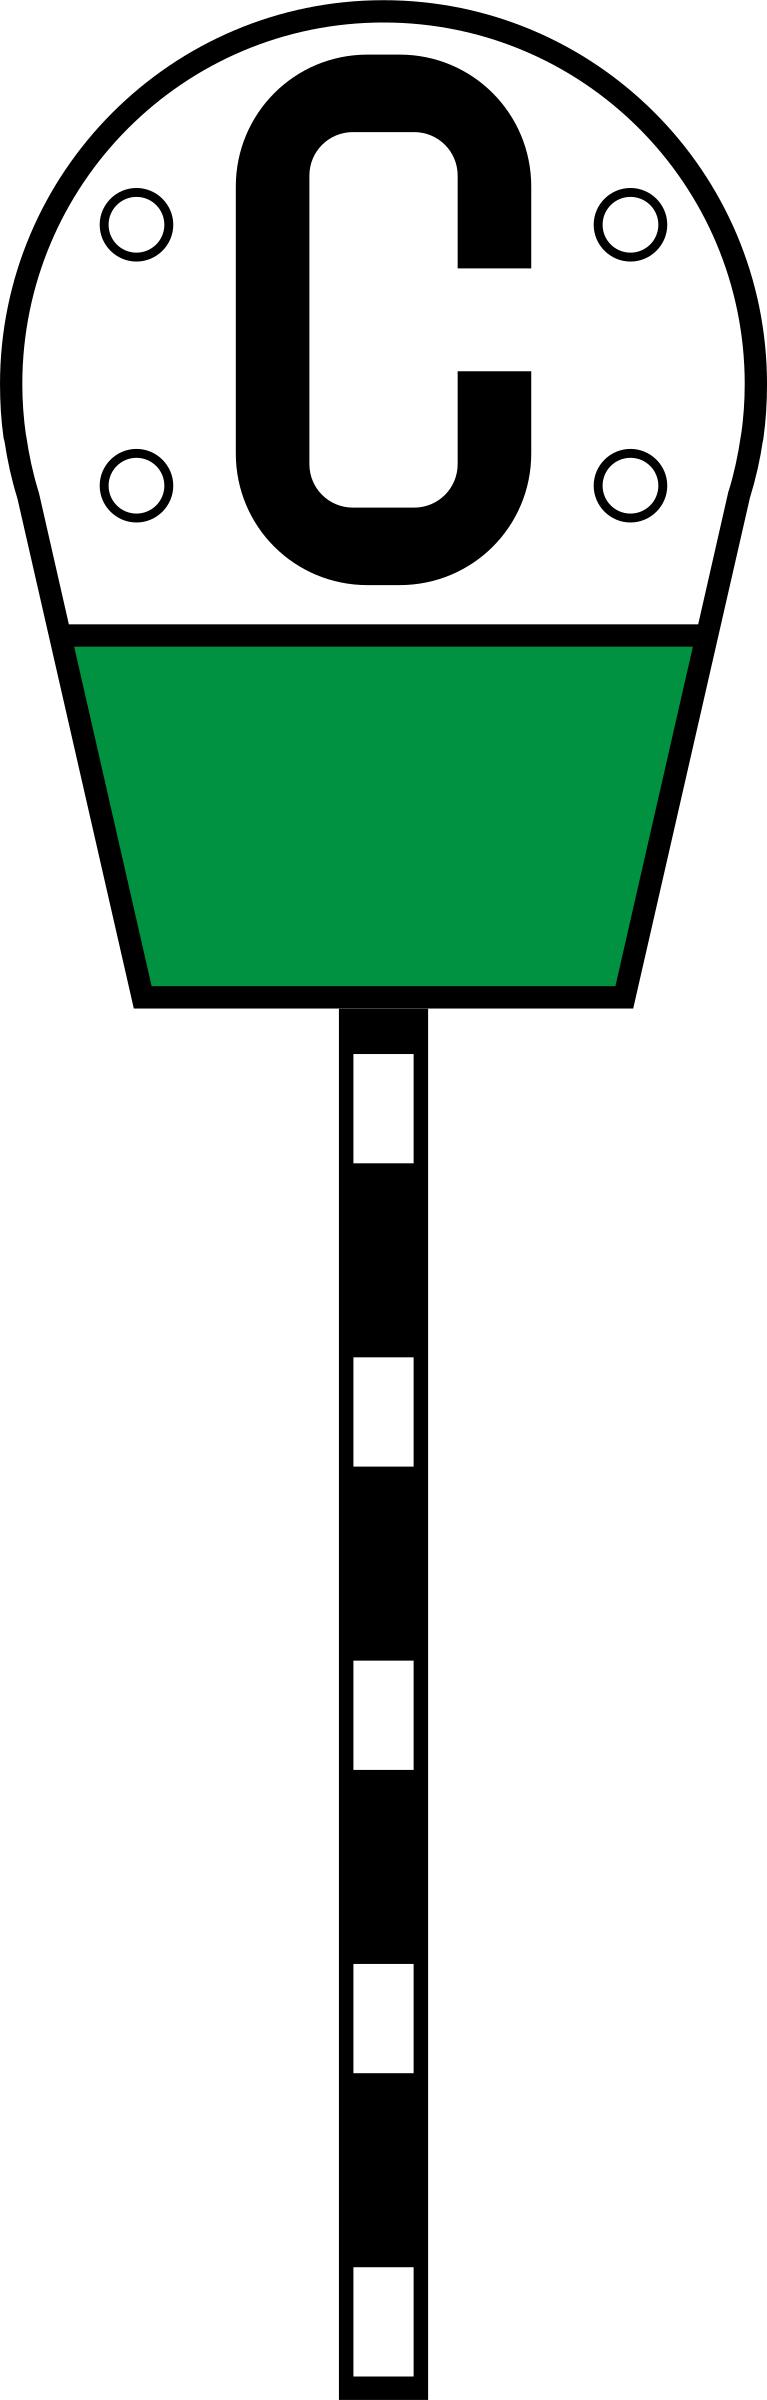 (GD-08) sign 